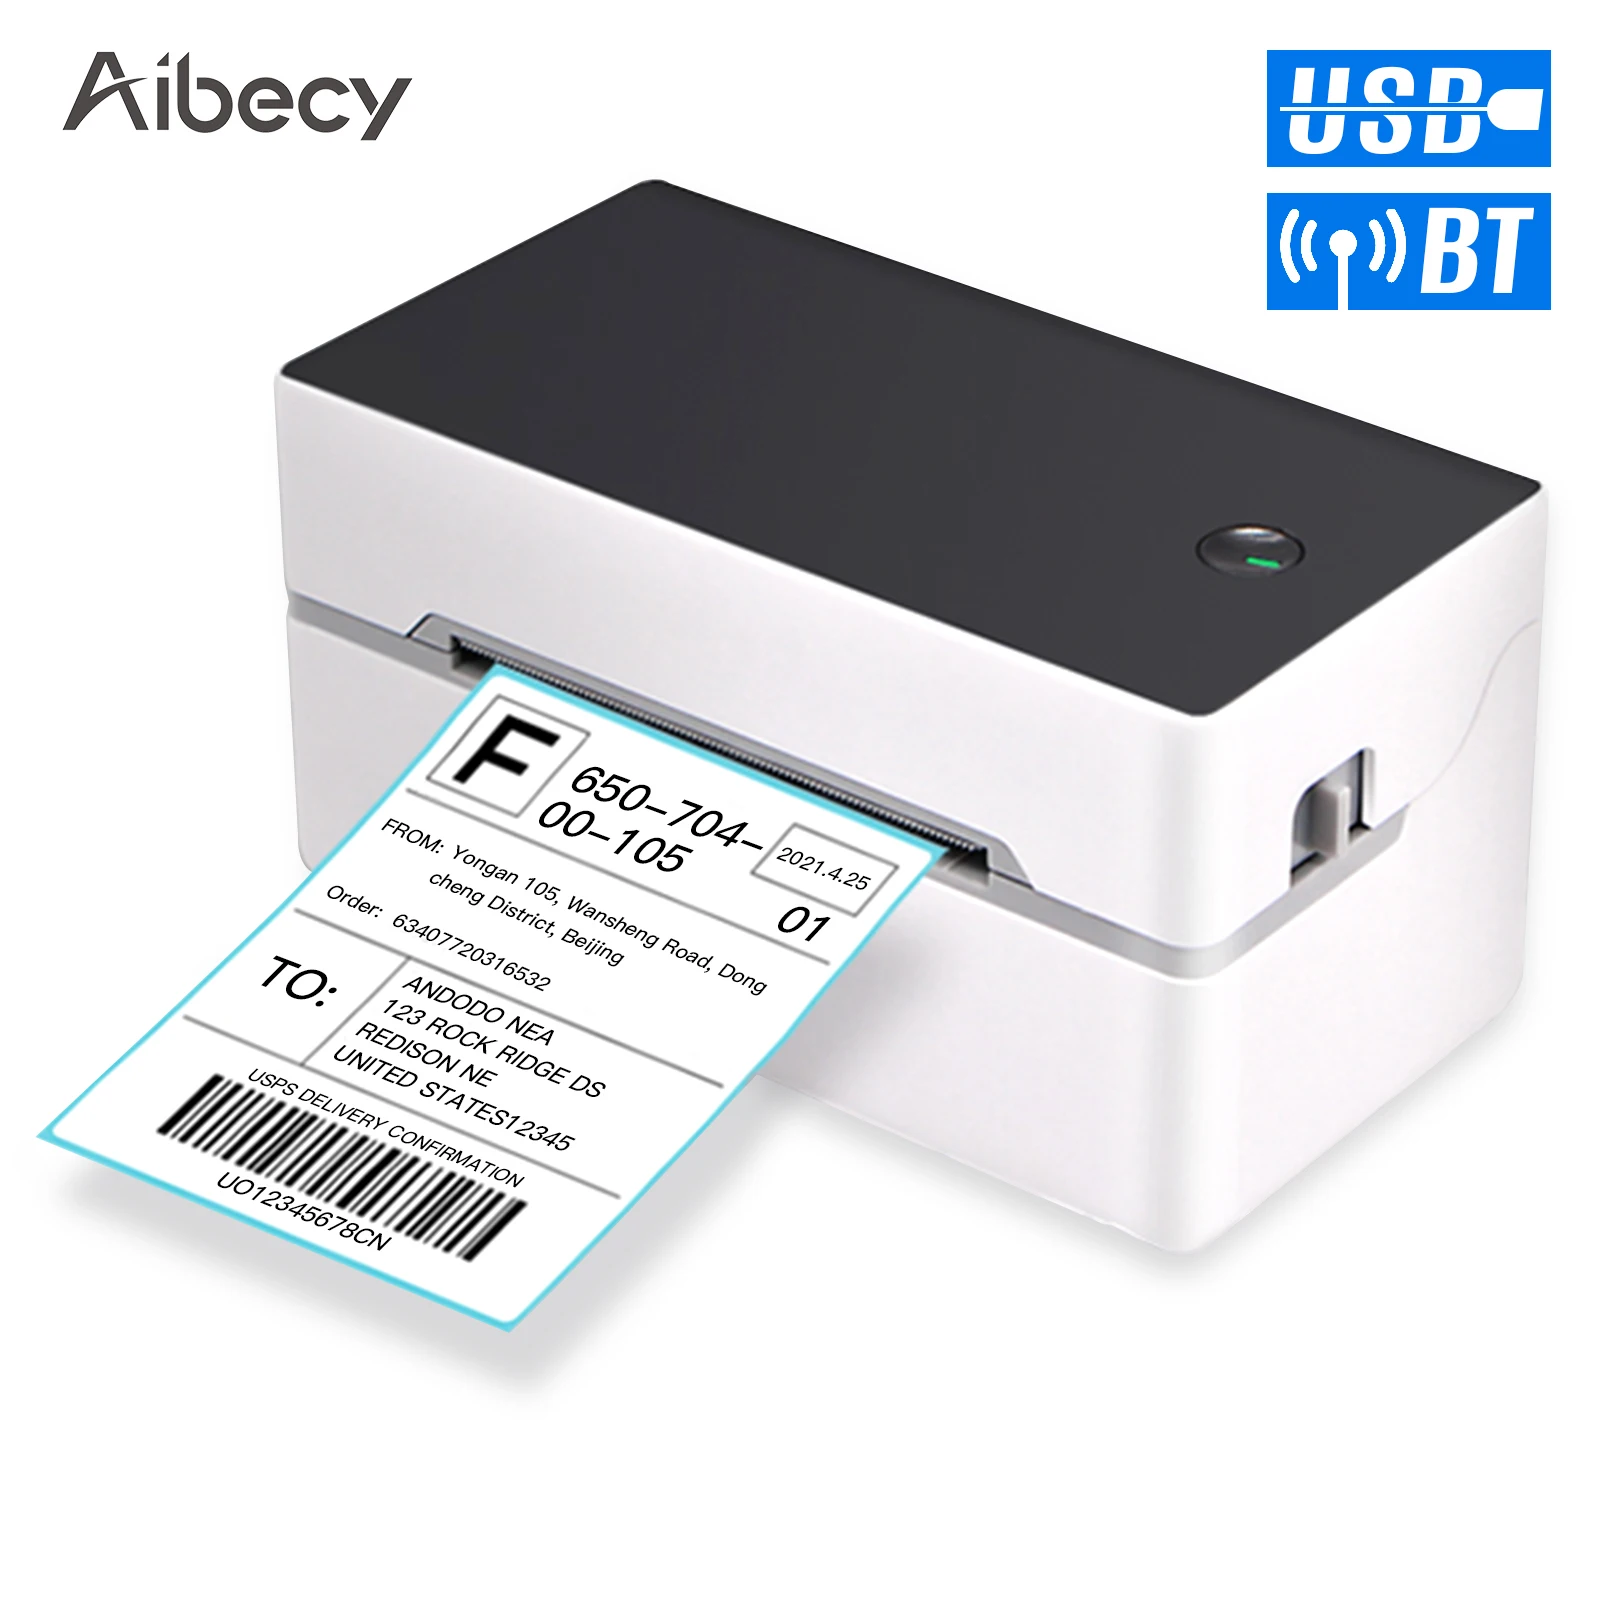    Aibecy    USB + BT,    